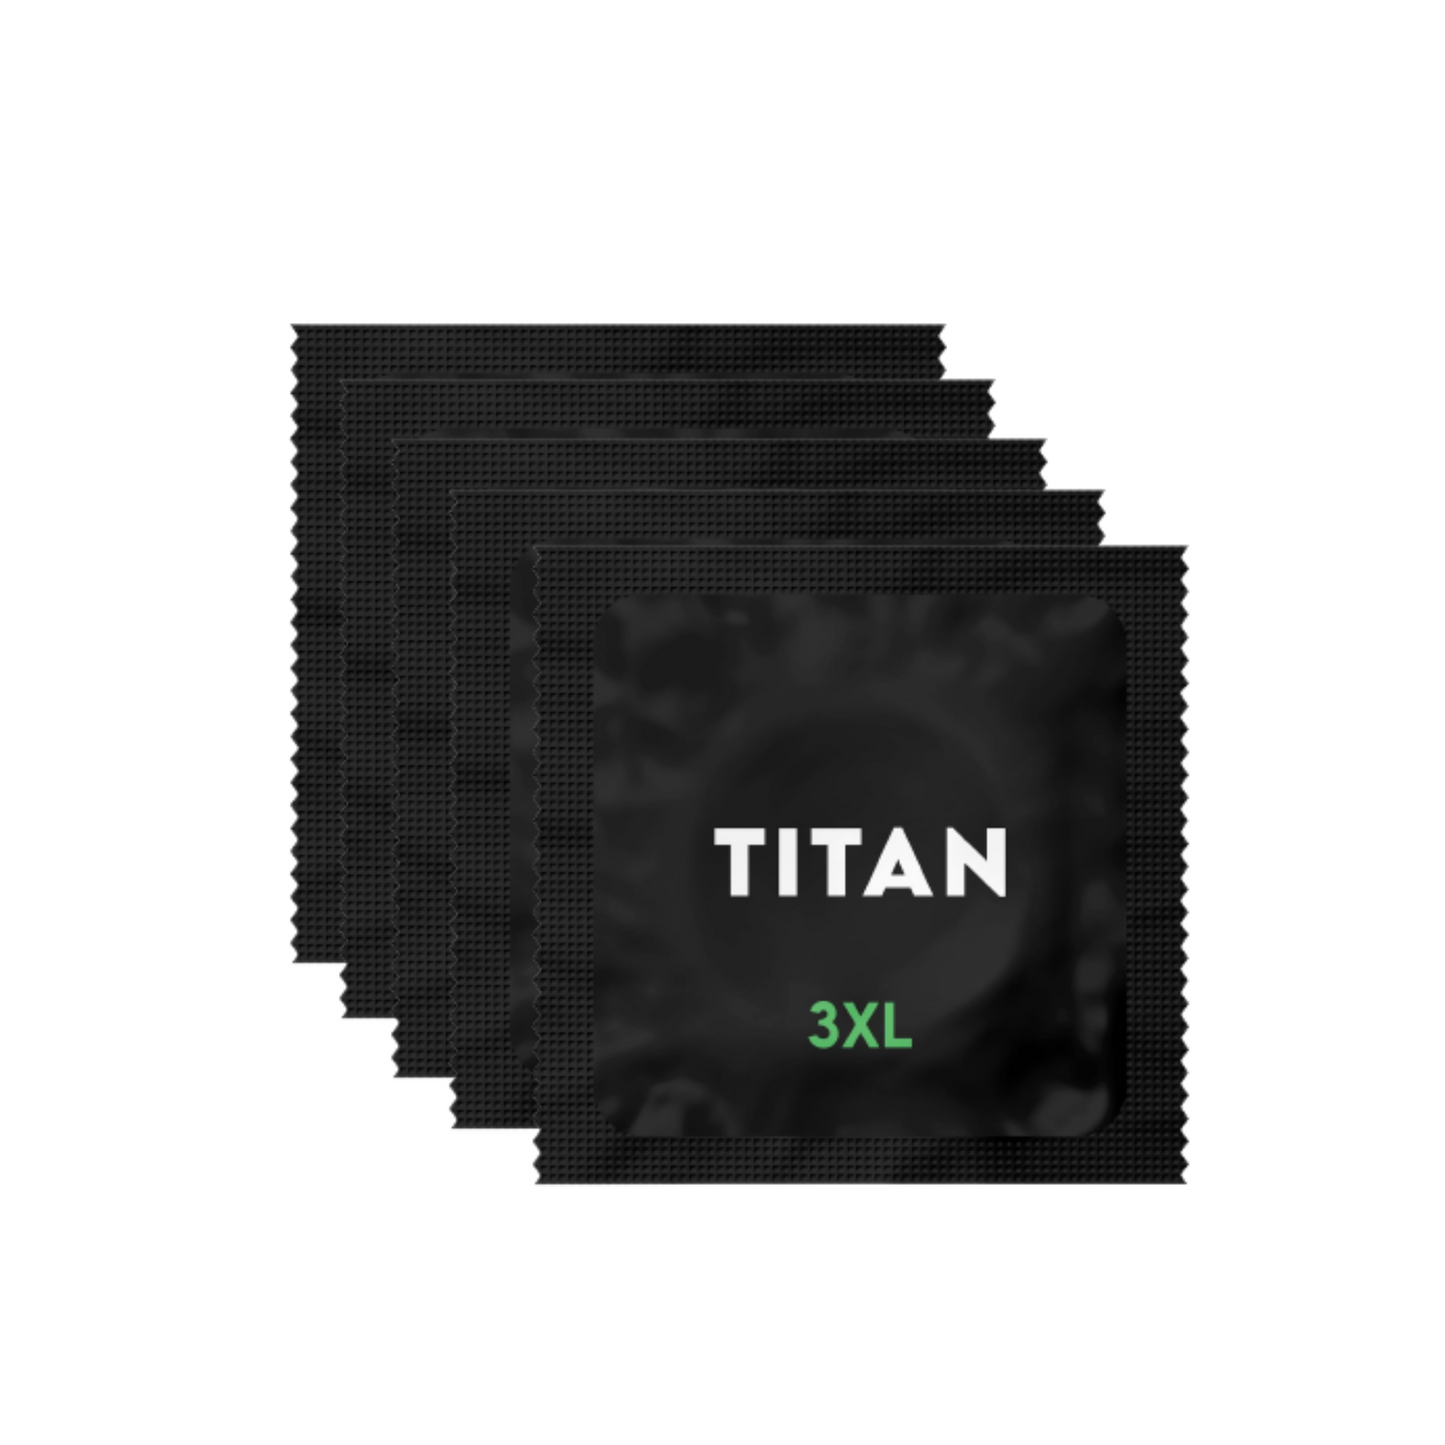 Extra Titan 3XL Samples